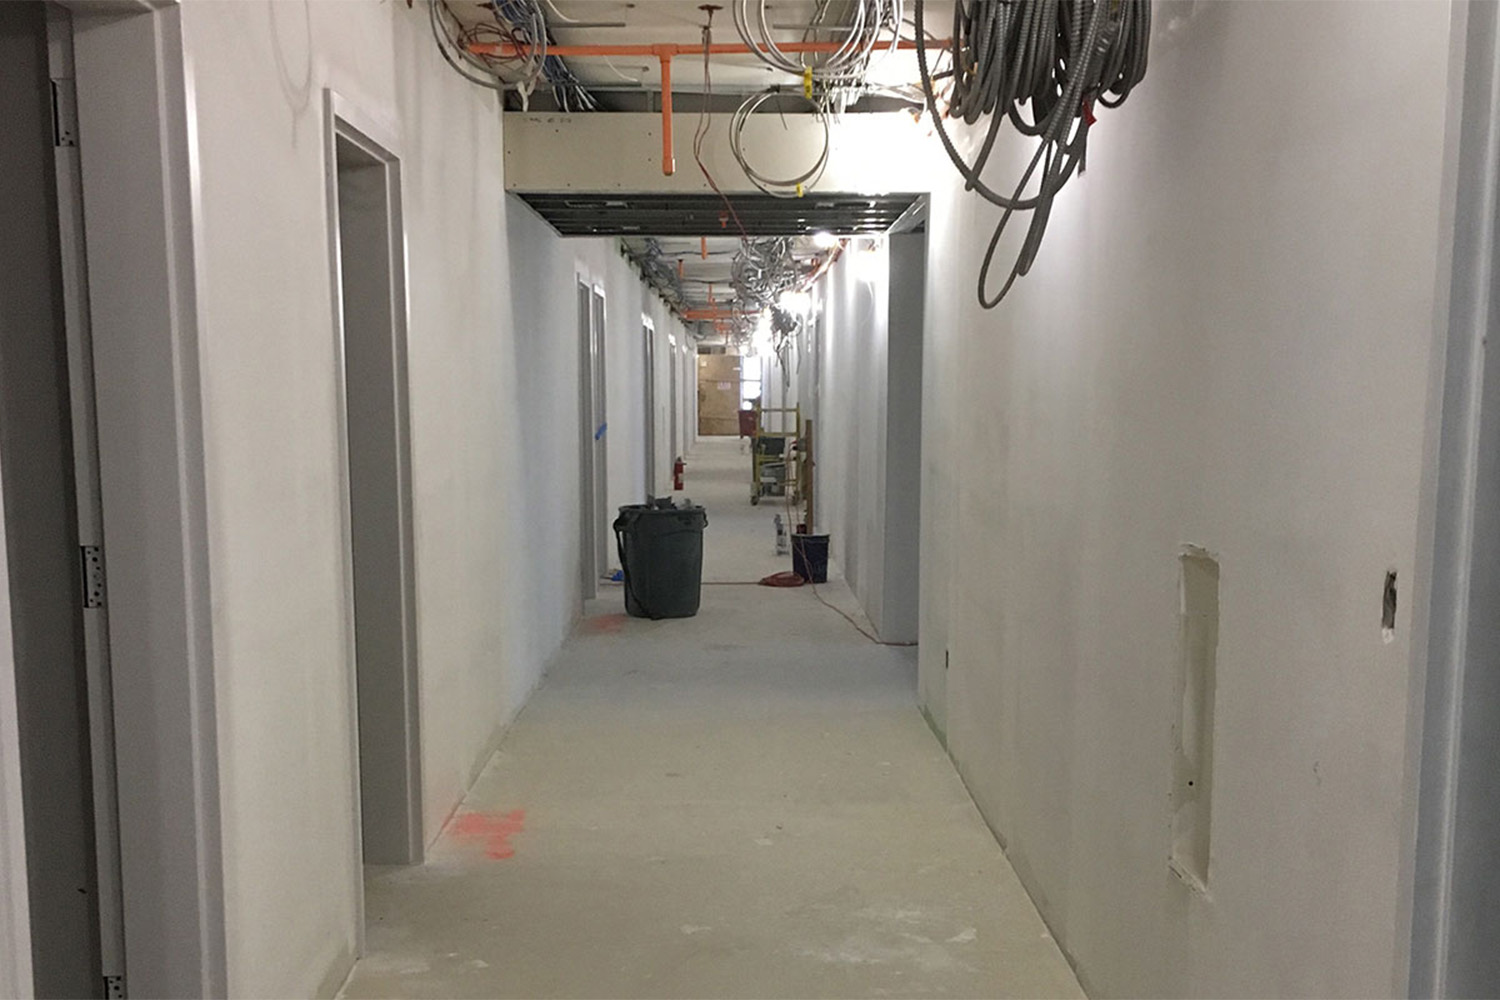 6th floor hallway under construction